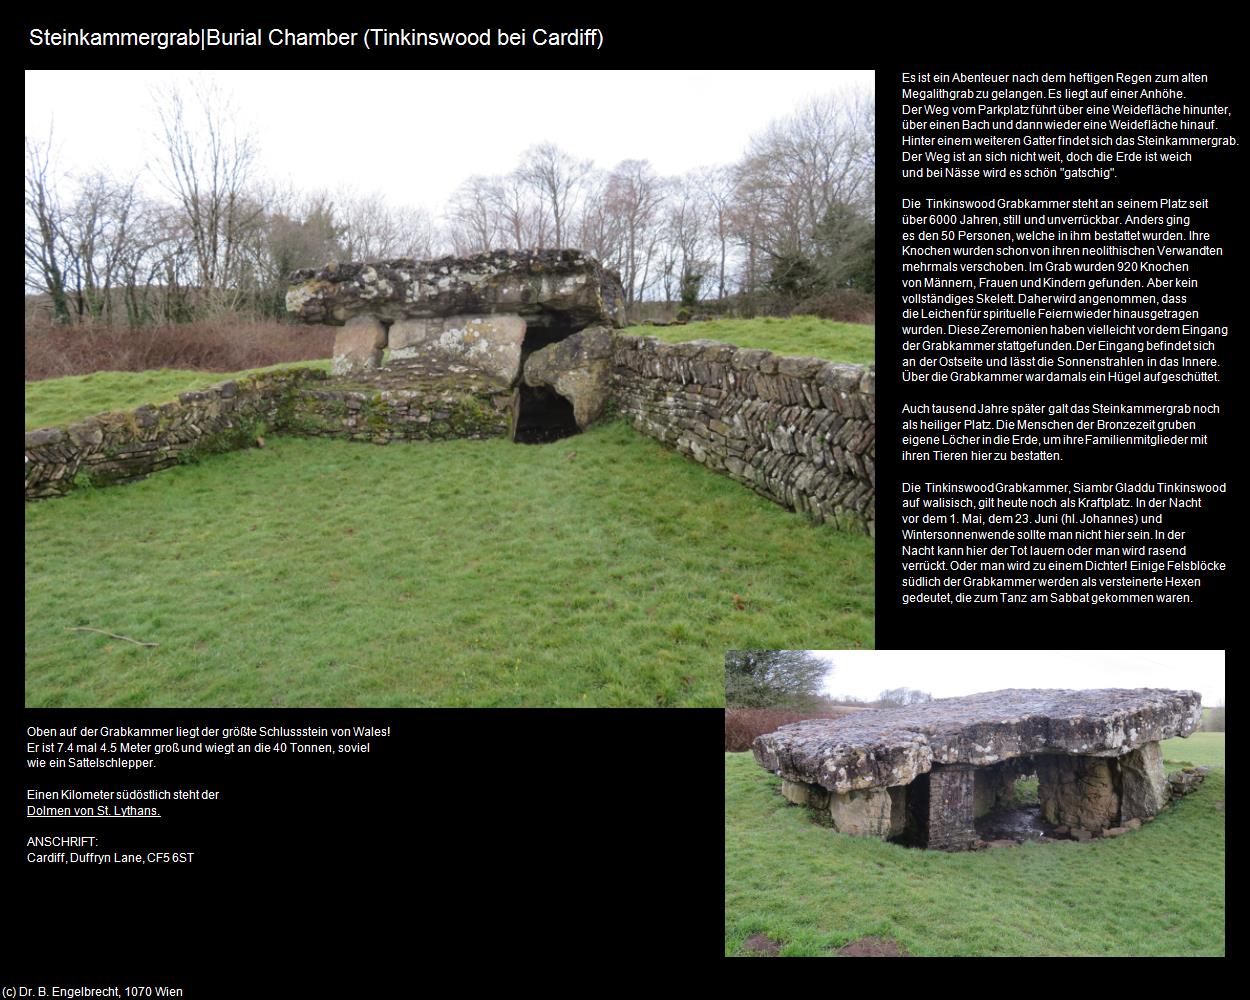 Steinkammergrab (Tinkinswood) (Cardiff, Wales) in Kulturatlas-ENGLAND und WALES(c)B.Engelbrecht